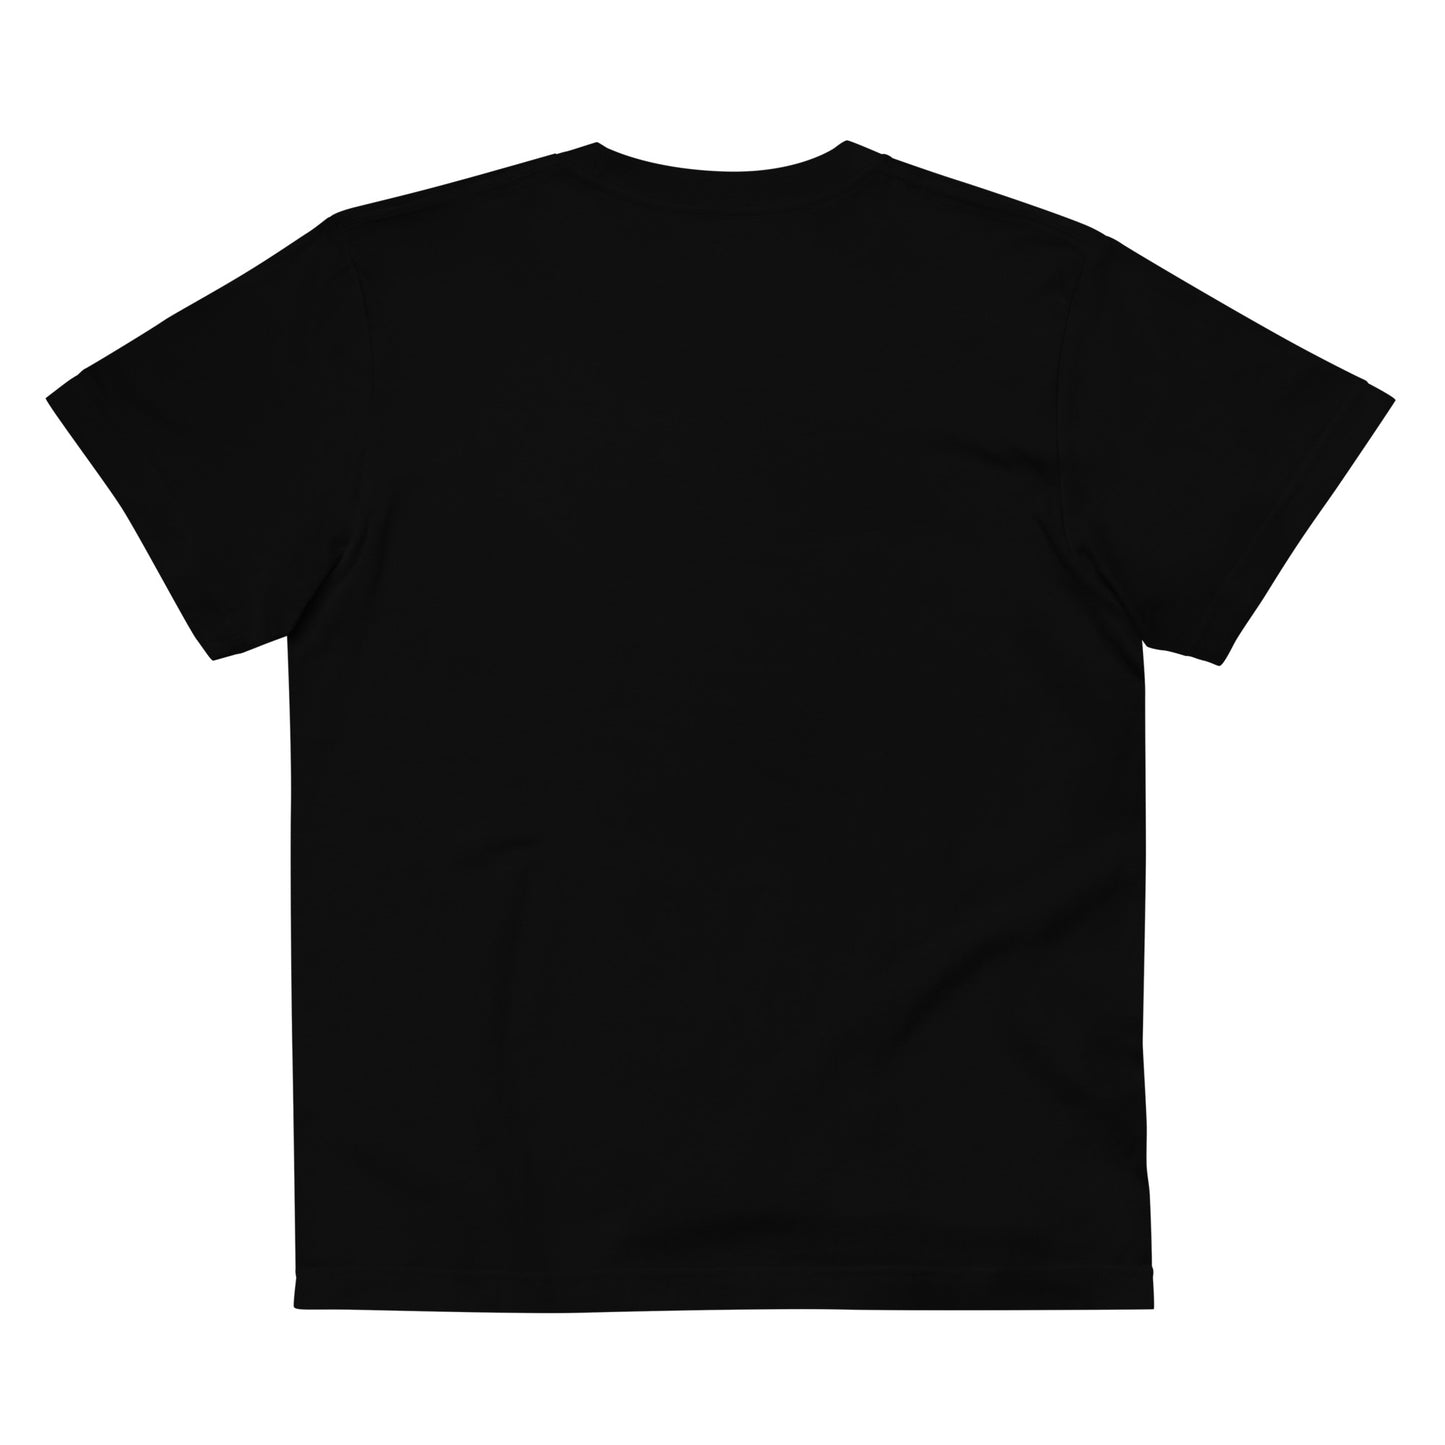 N004 - High quality cotton T-shirt (Scooter : Black)